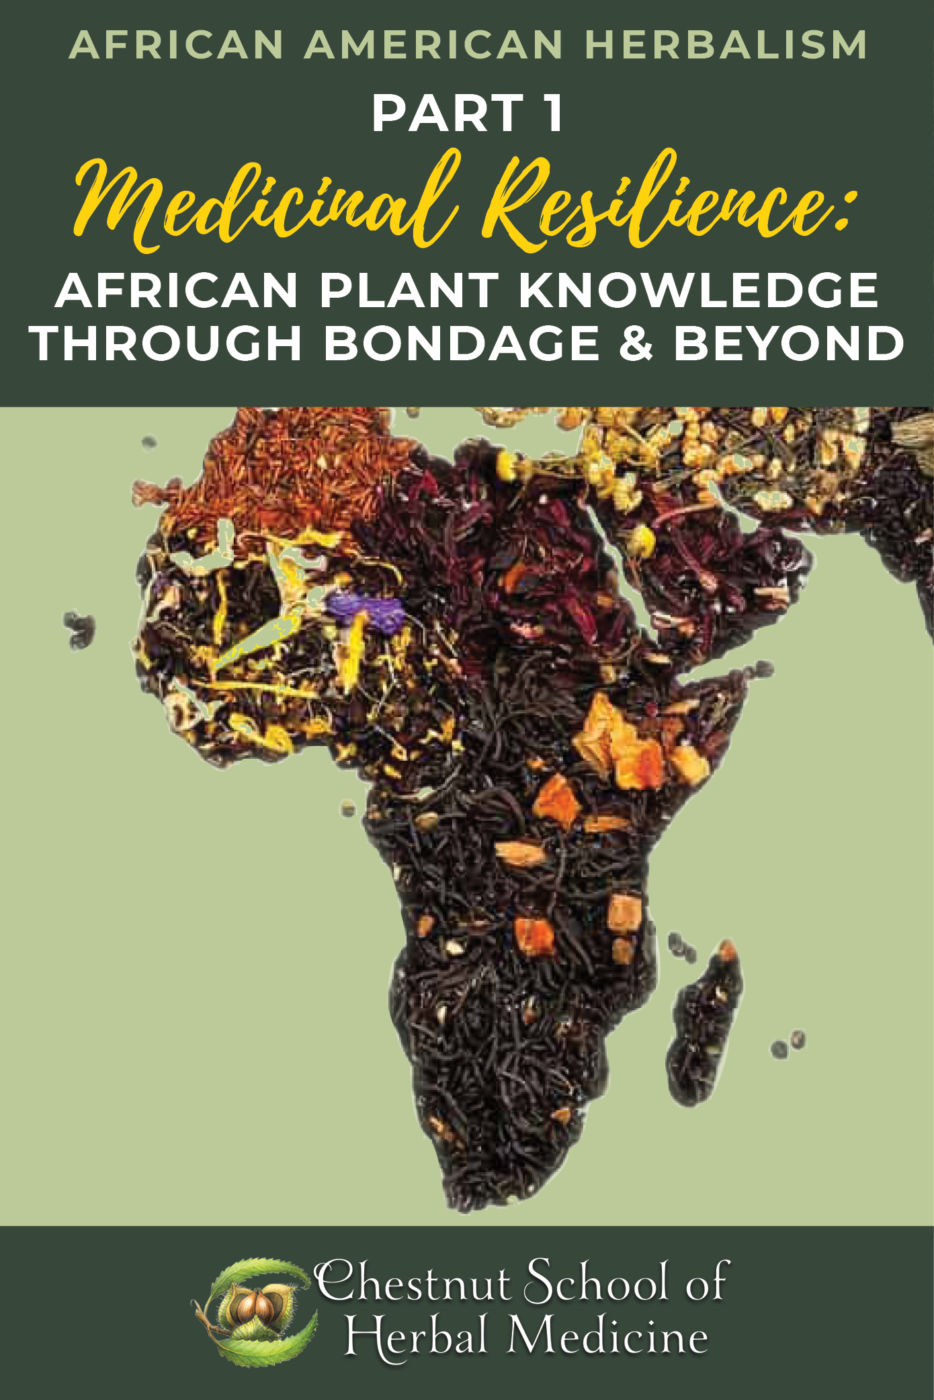 African American Herbalism Part 1: Medicinal Resilience.